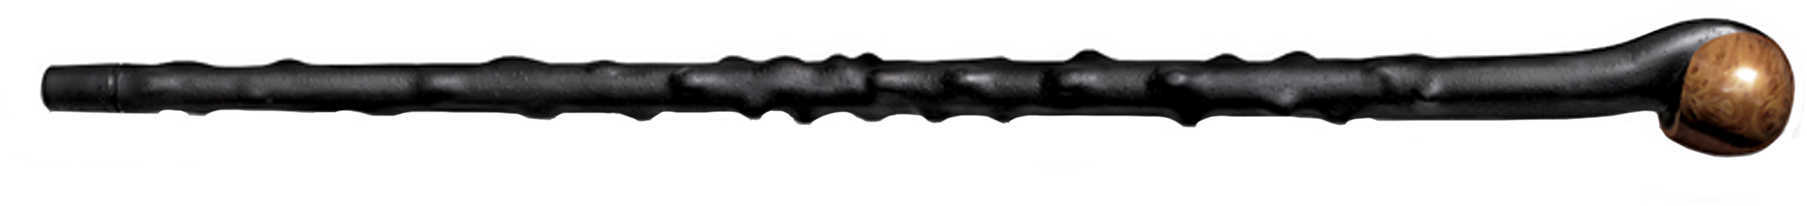 Cold Steel Cs-91Pbs Blackthorn Irish Walking Stick Polypropylene 37"